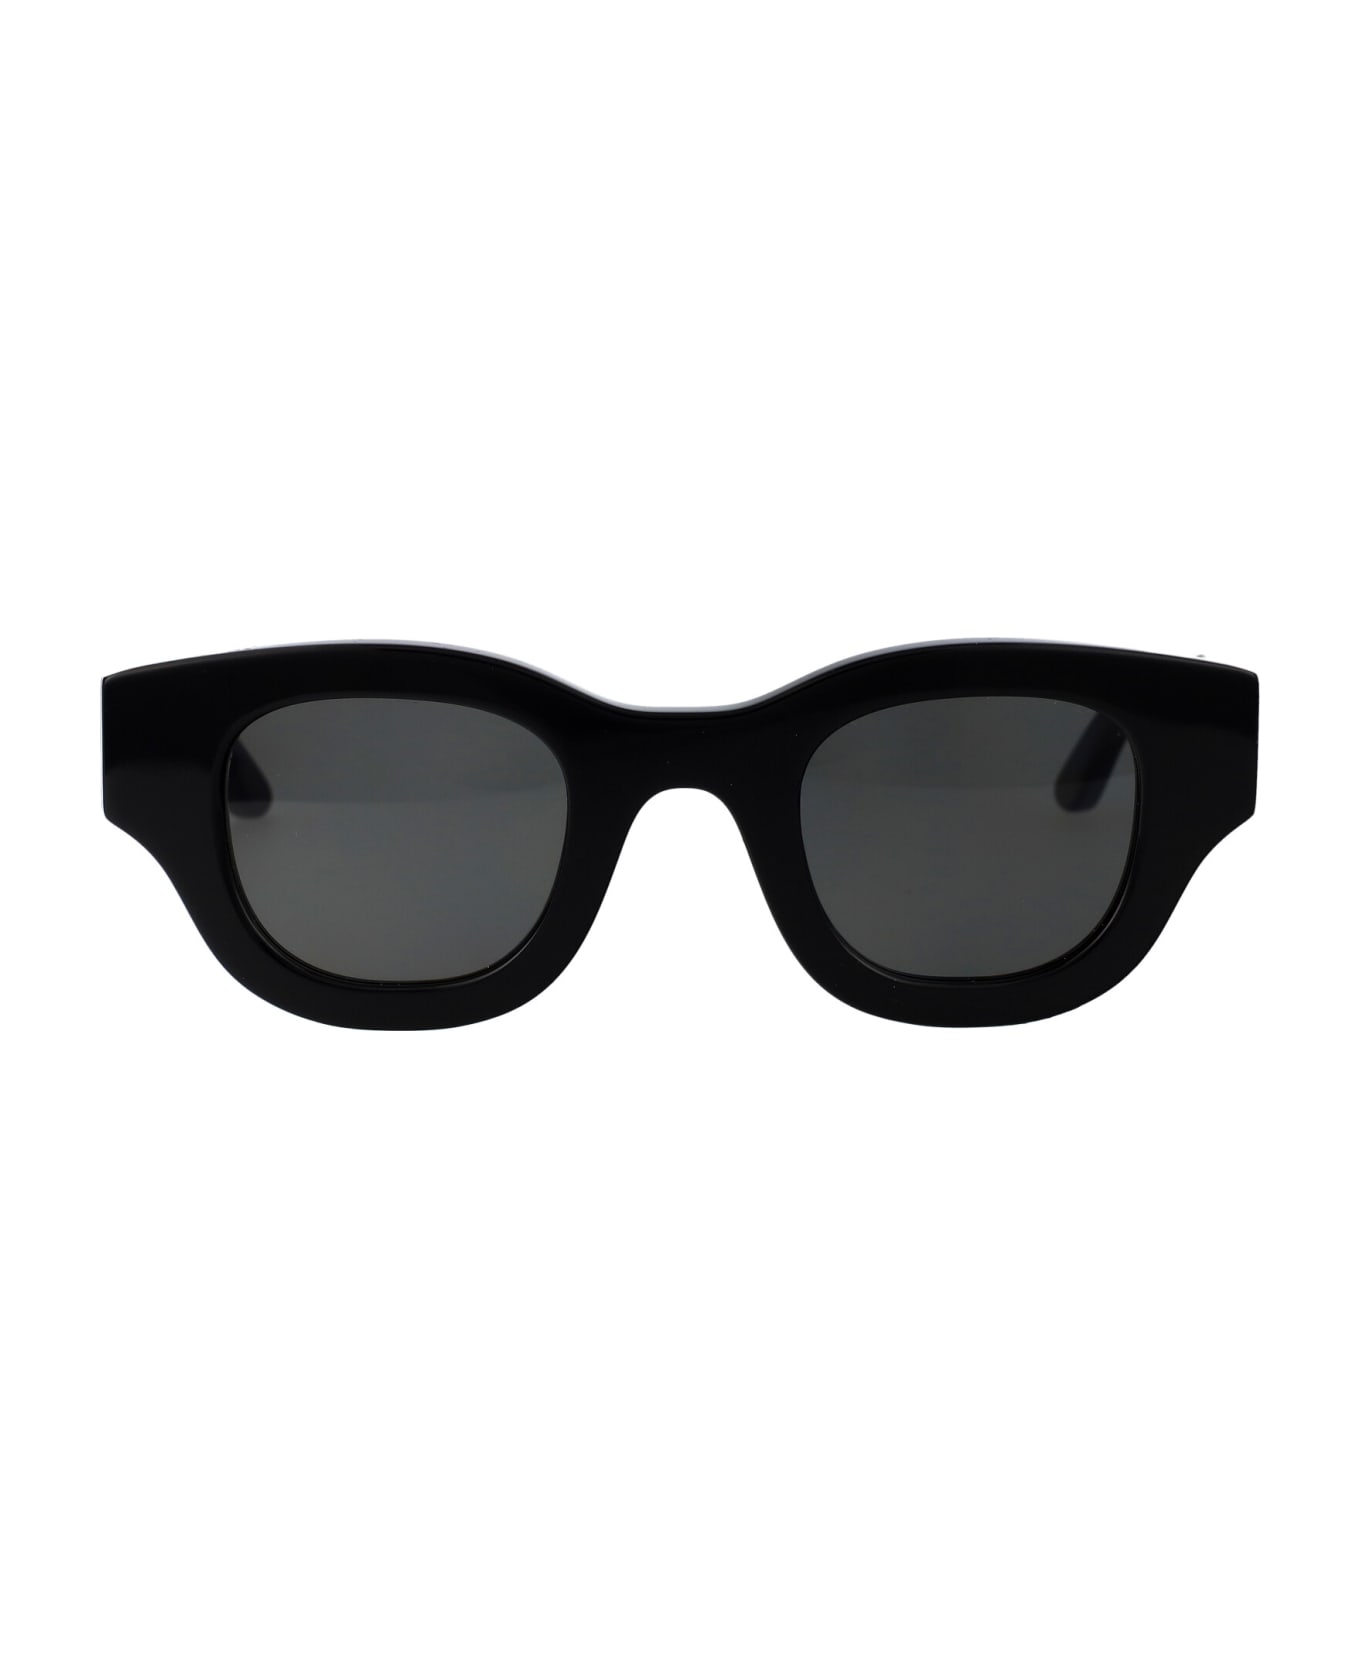 Thierry Lasry Autocracy Sunglasses - 101 BLACK